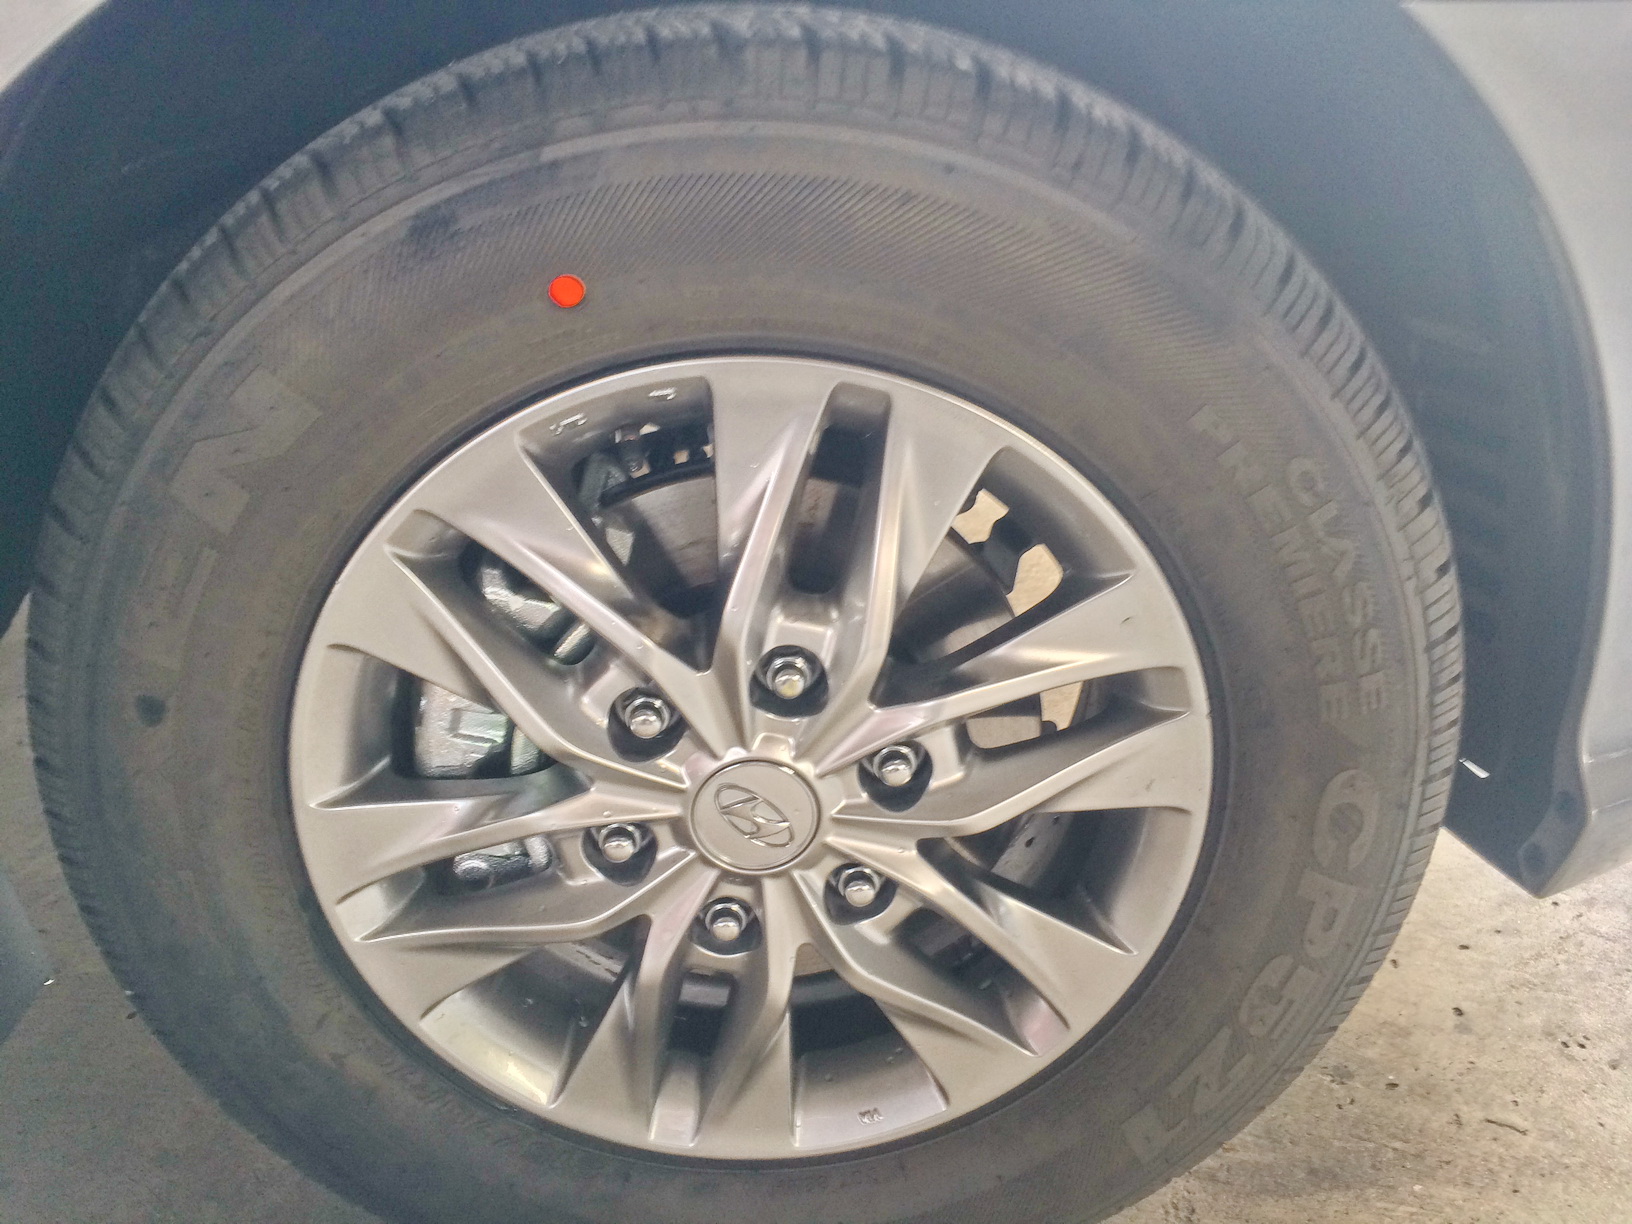 2014-Hyundai-H1-Deluxe-rims and wheels